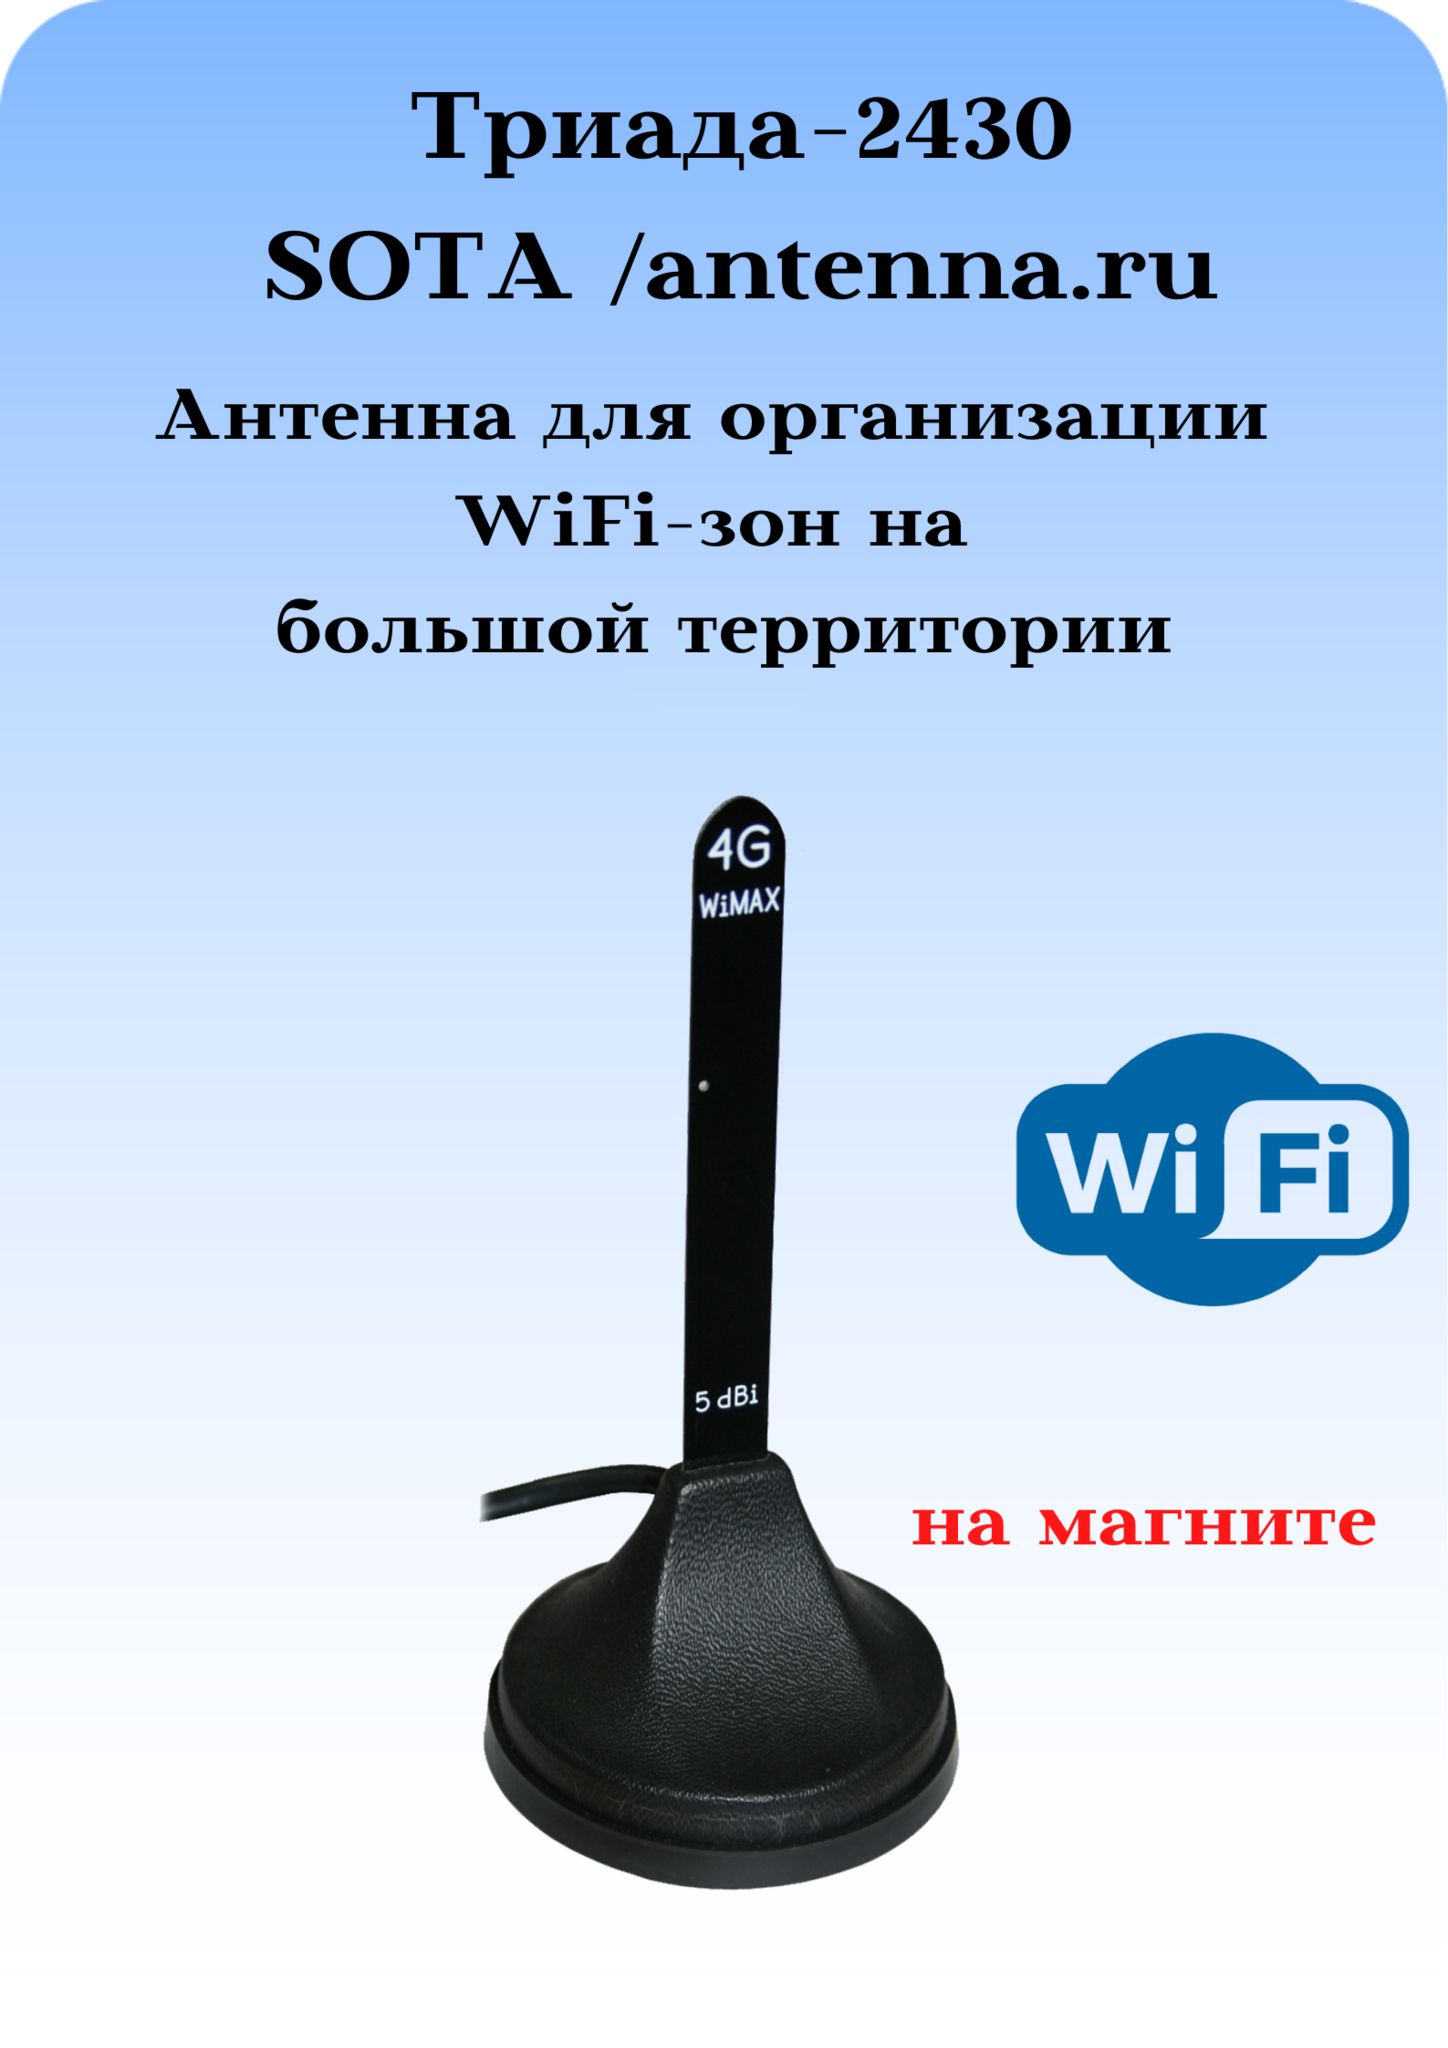 Триада- 2430/antenna.ru. Антенна WiFi круговая на магнитном основании